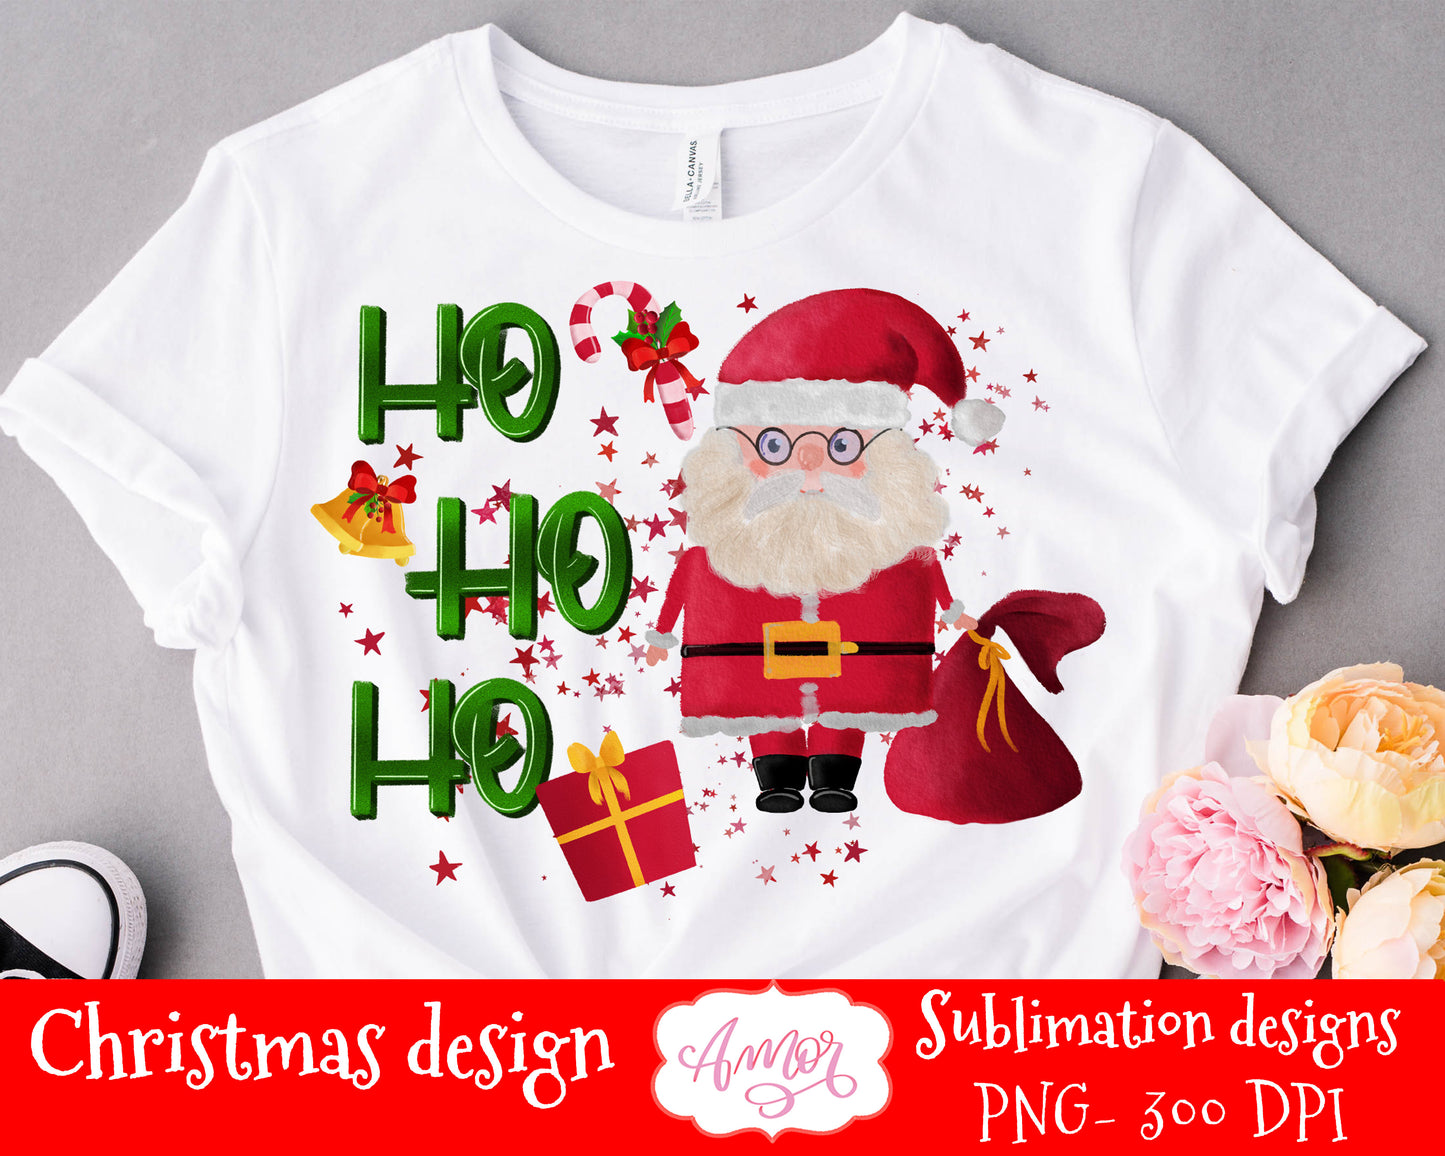 BUNDLE Christmas sublimation designs for T-shirts